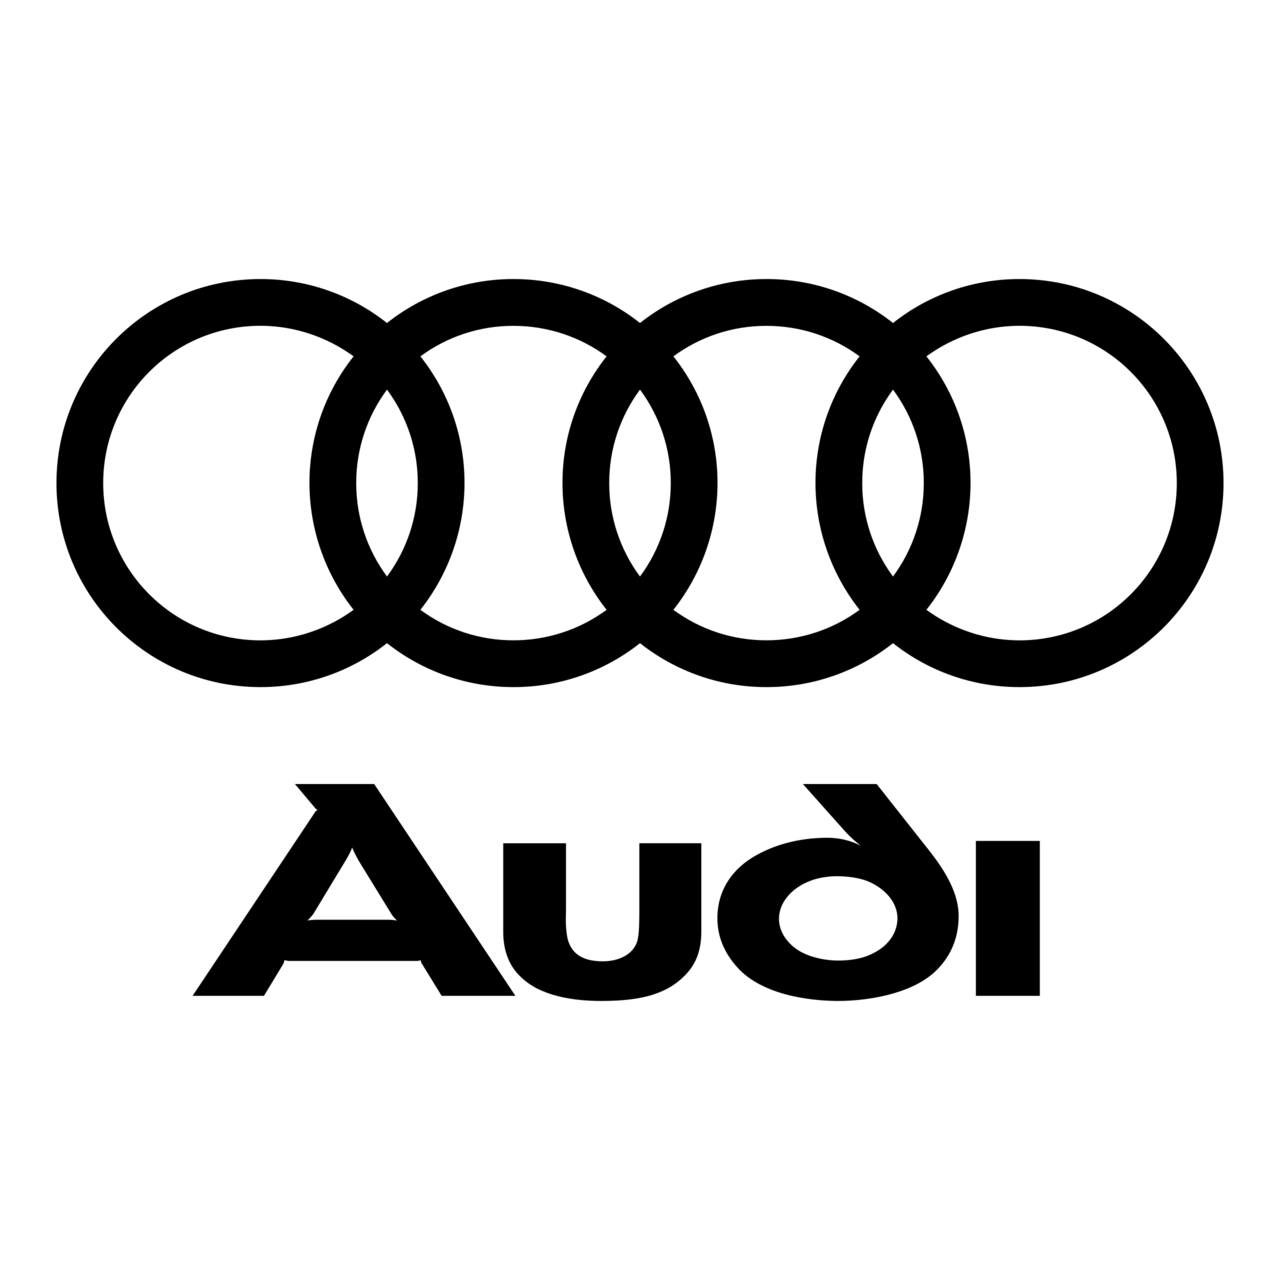 The Audi logo